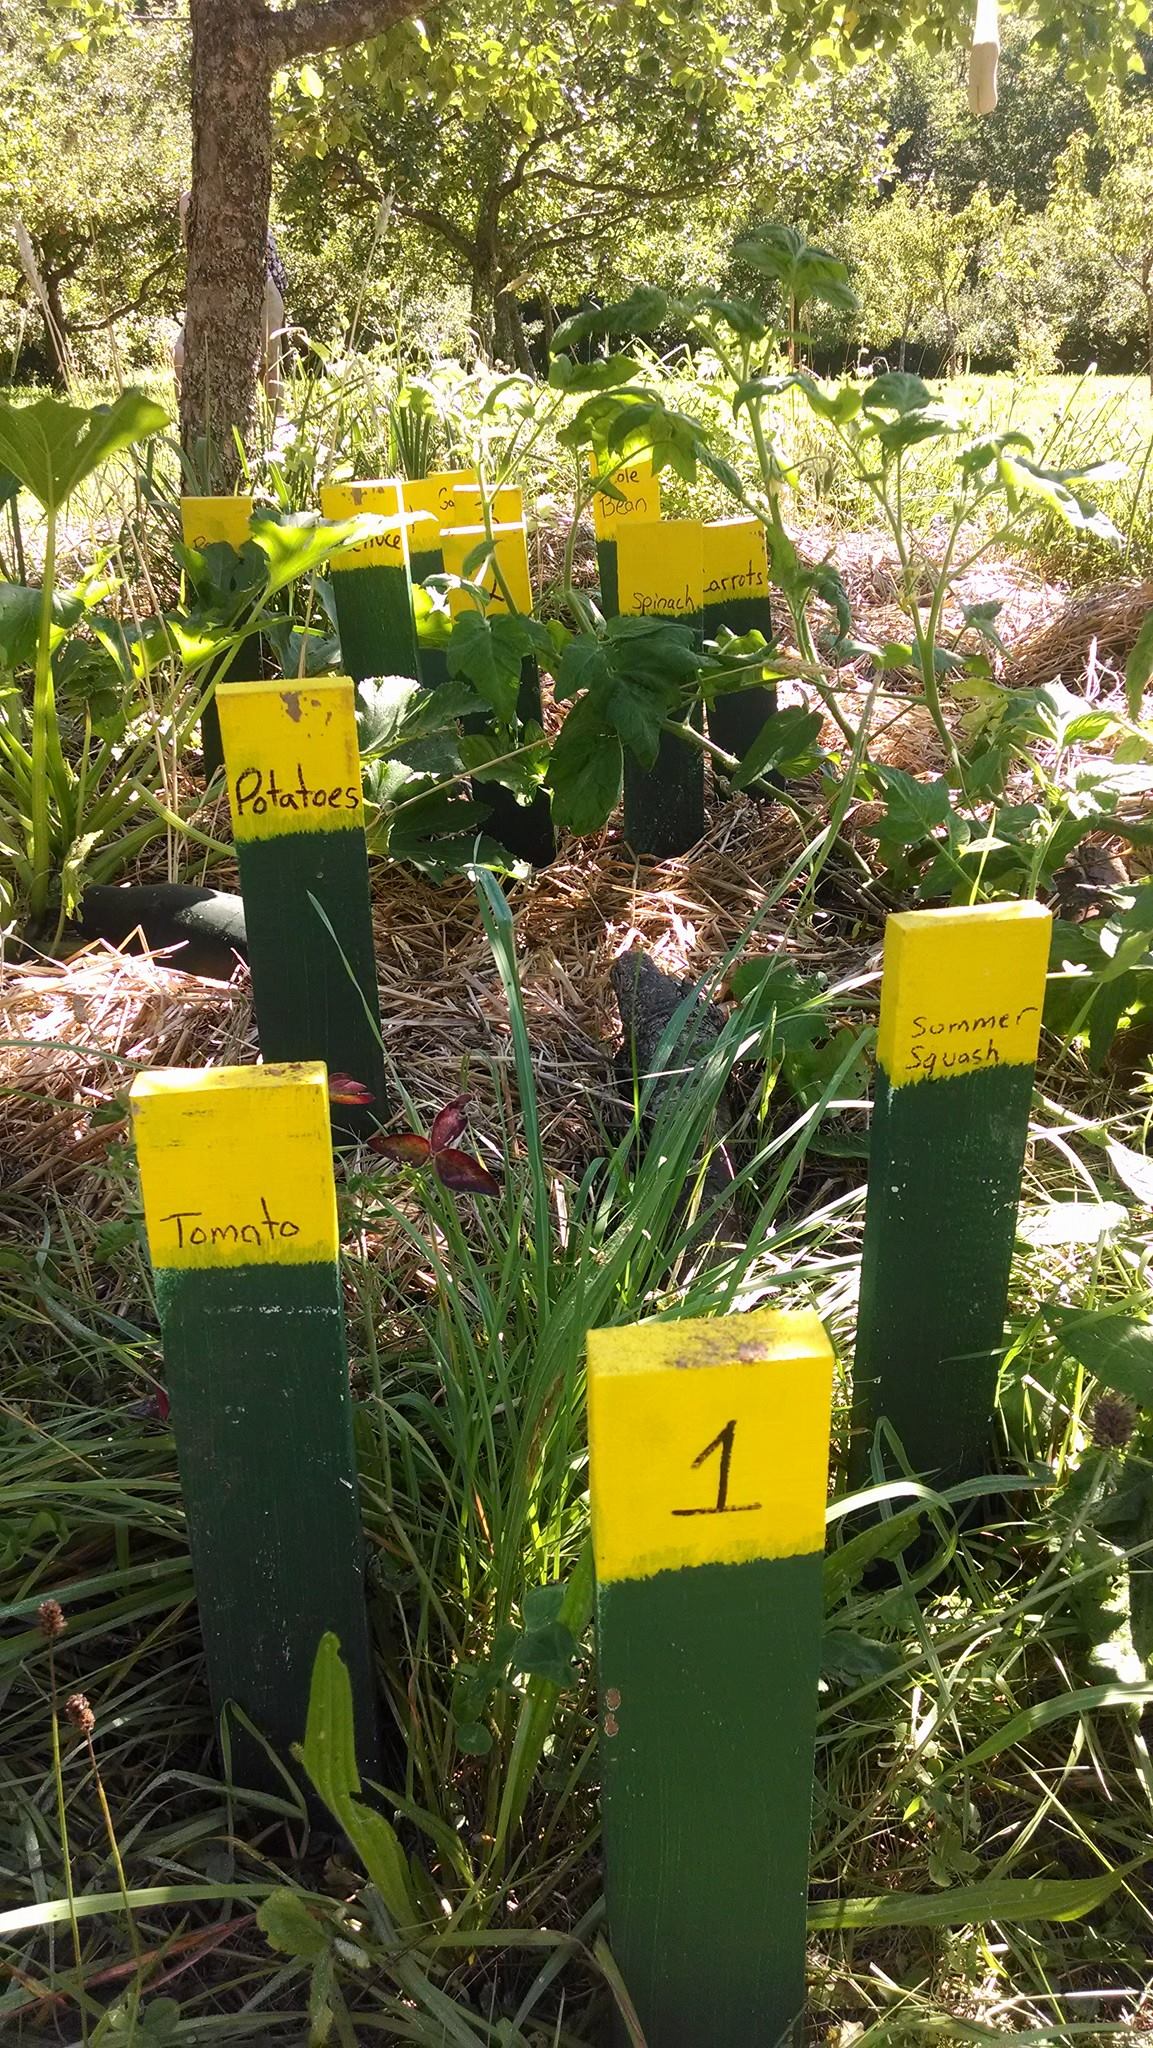 signs marking test plots of vegetables under apple trees